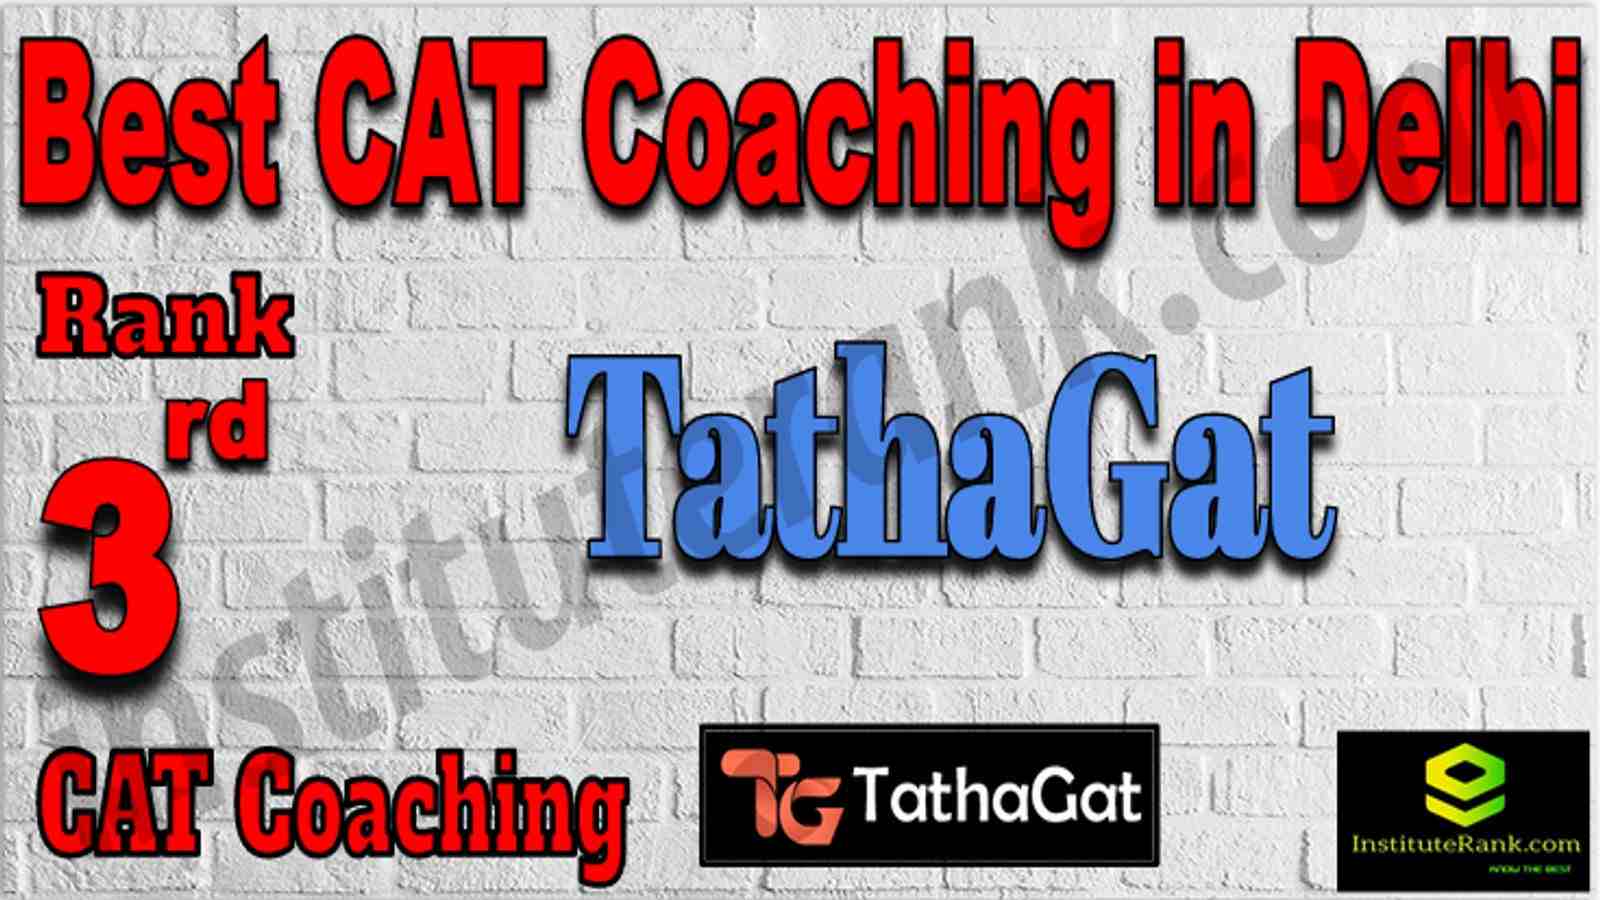 Rank 3rd CAT Coaching in Delhi Tathagat CAT Coaching. Tathagat CAT Coaching in Delhi. Rank 3 Best CAT Coaching in Delhi Tathagat. Tathagat Best CAT Coaching in Delhi. 3rd Best CAT Coaching in Delhi Tathagat. Tathagat Best CAT Coaching Institute in Delhi